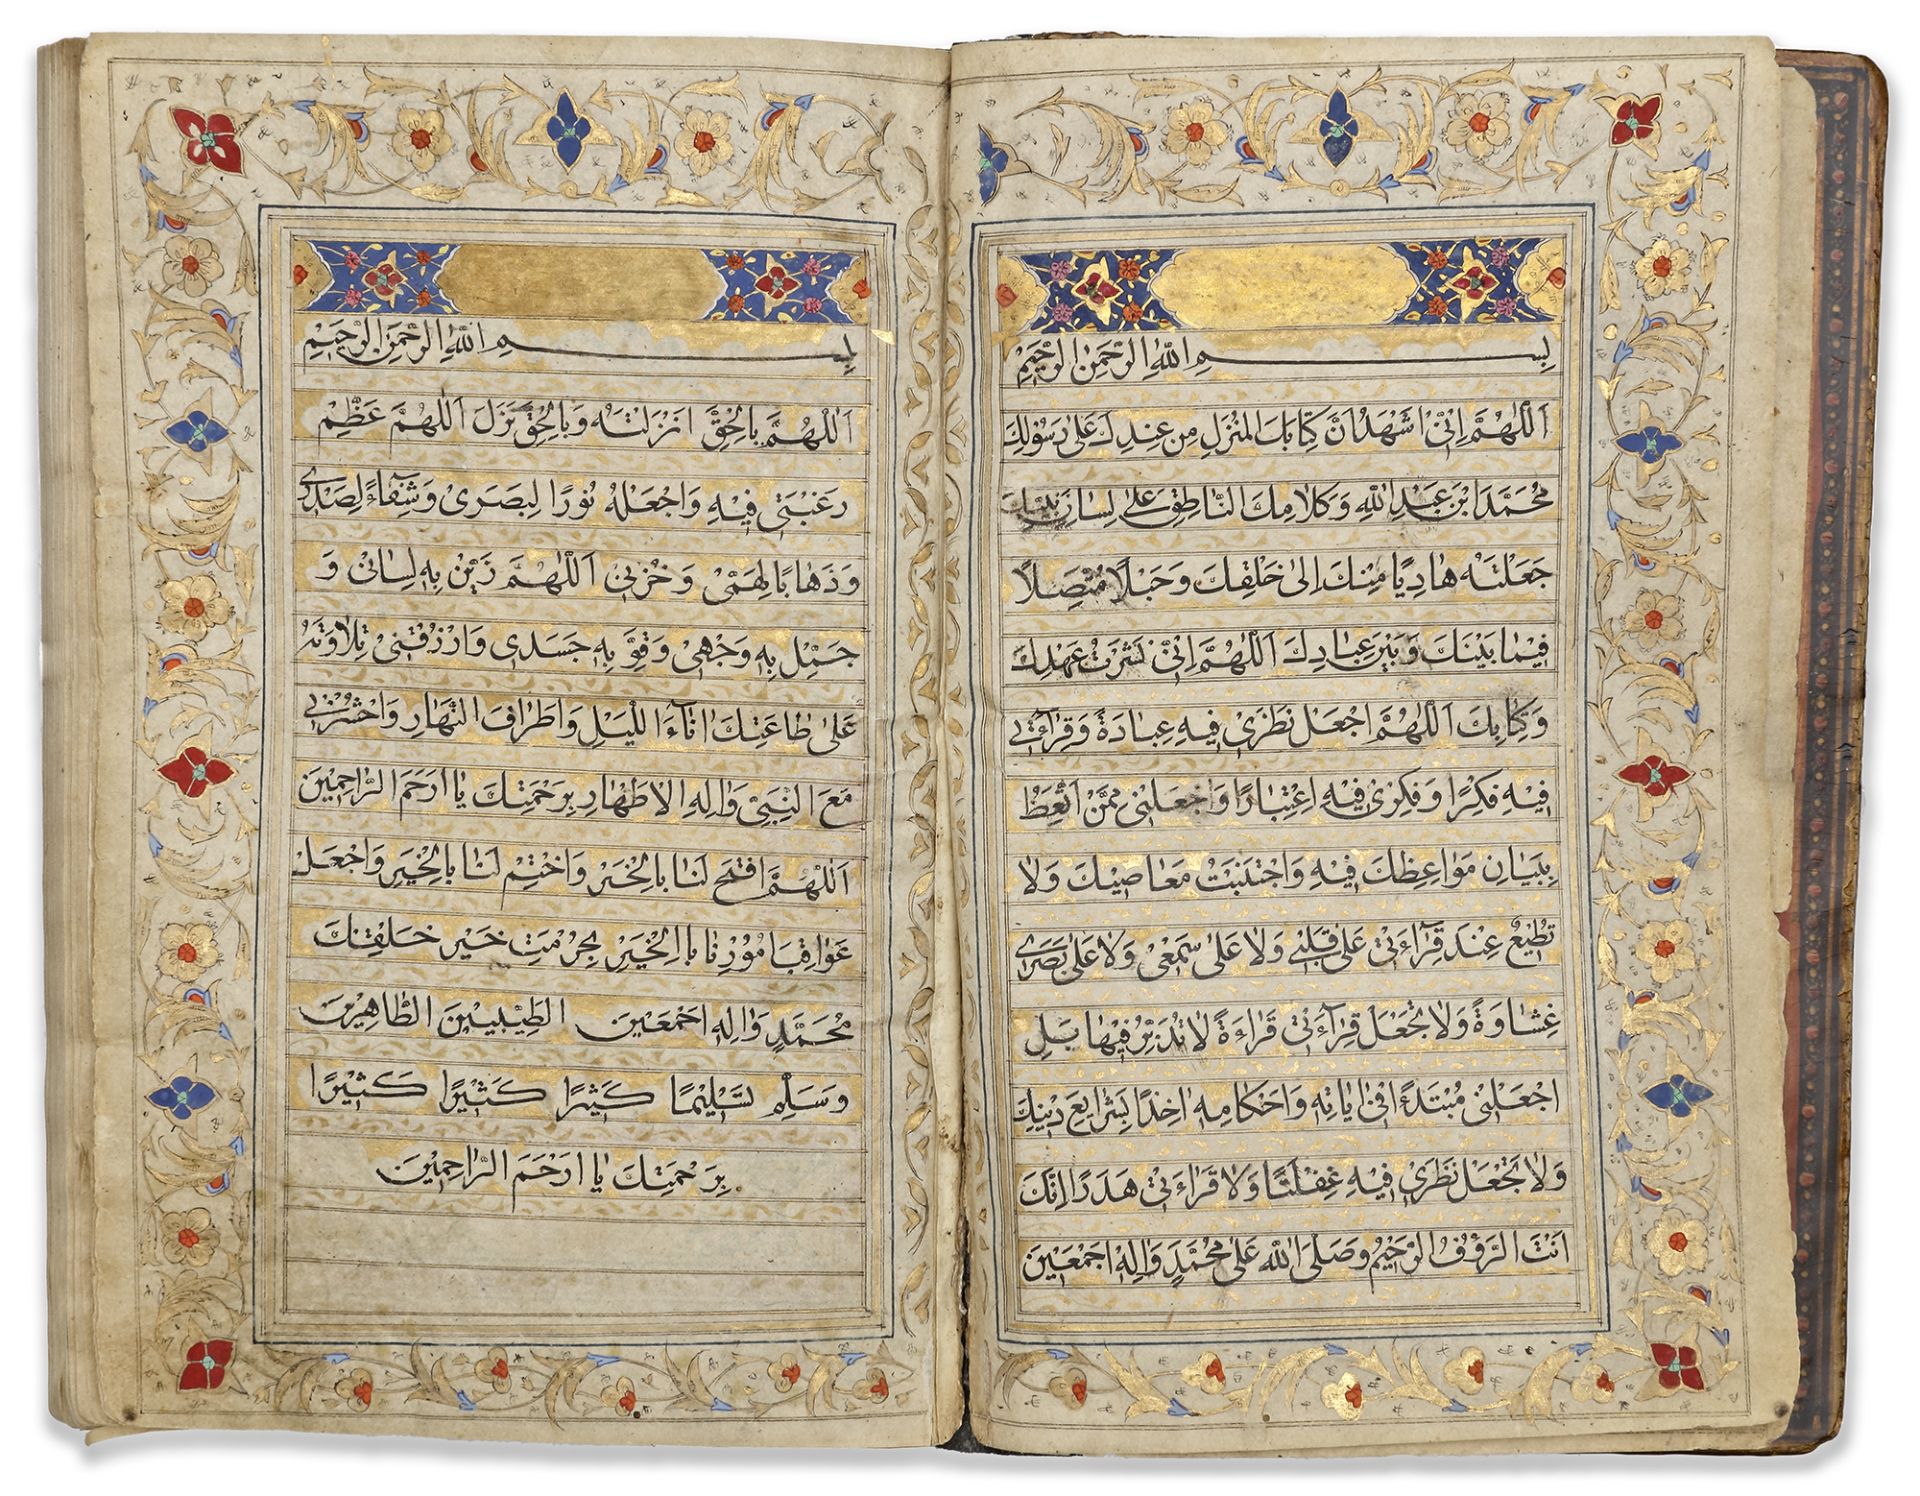 A FINELY ILLUMINATED QAJAR QURAN SIGNED BY ABDULLAH IBN ASHUR AL-ISFAHANI IN 1204 AH/1789 AD - Image 4 of 5